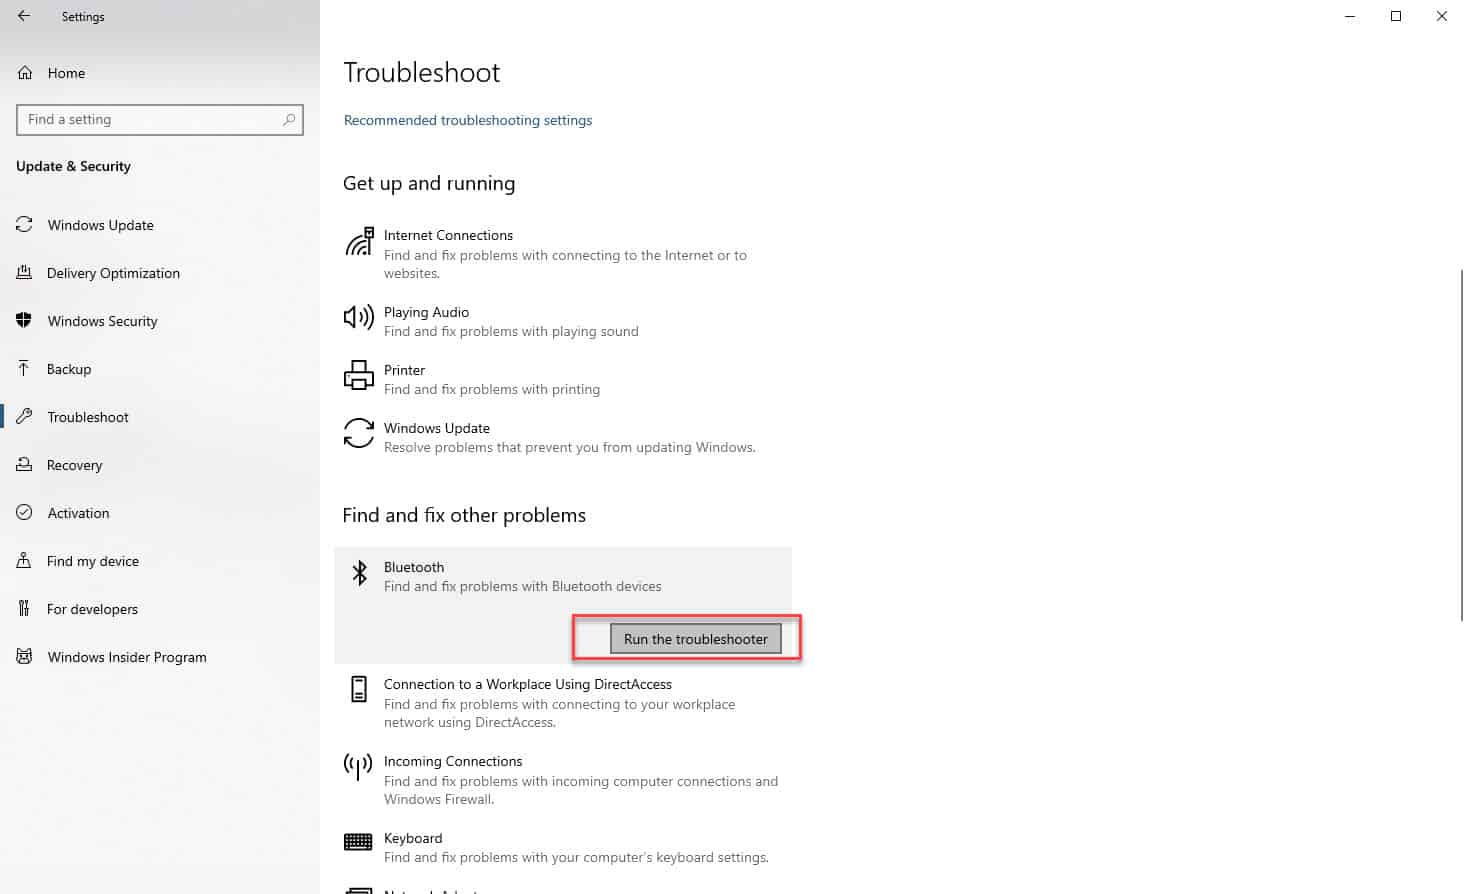 Windows 10 run the troubleshooter